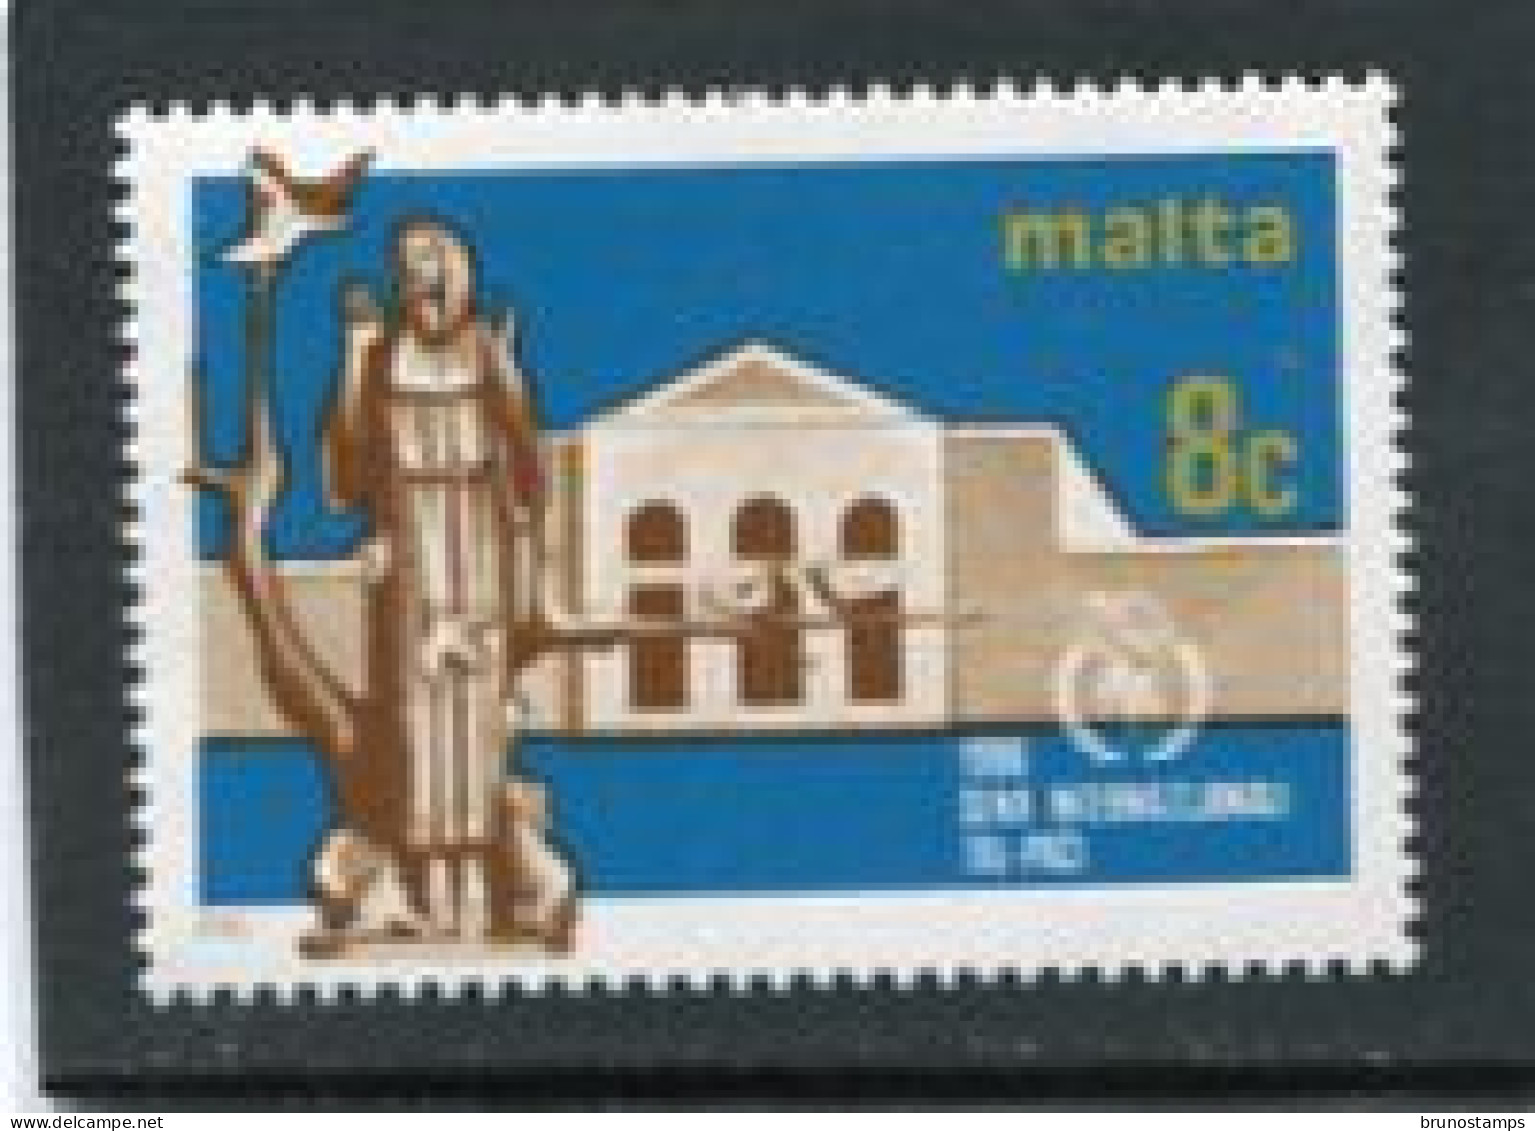 MALTA - 1986  8c  PEACE  MINT NH - Malte